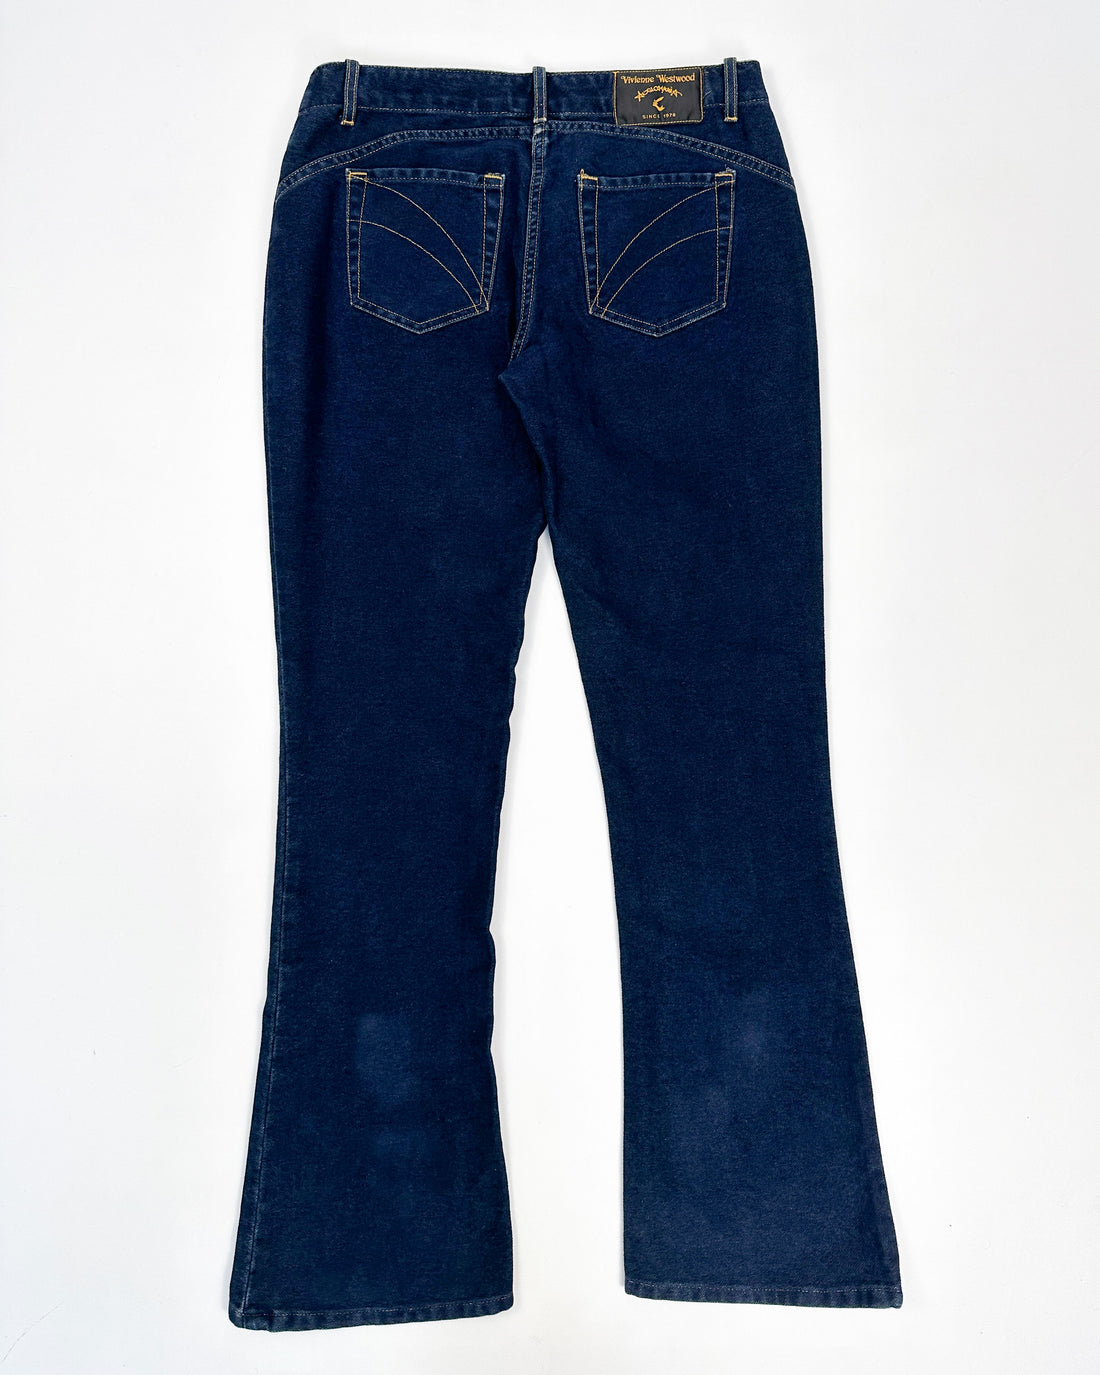 Vivienne Westwood Anglomania Blue Denim Pants 2000's